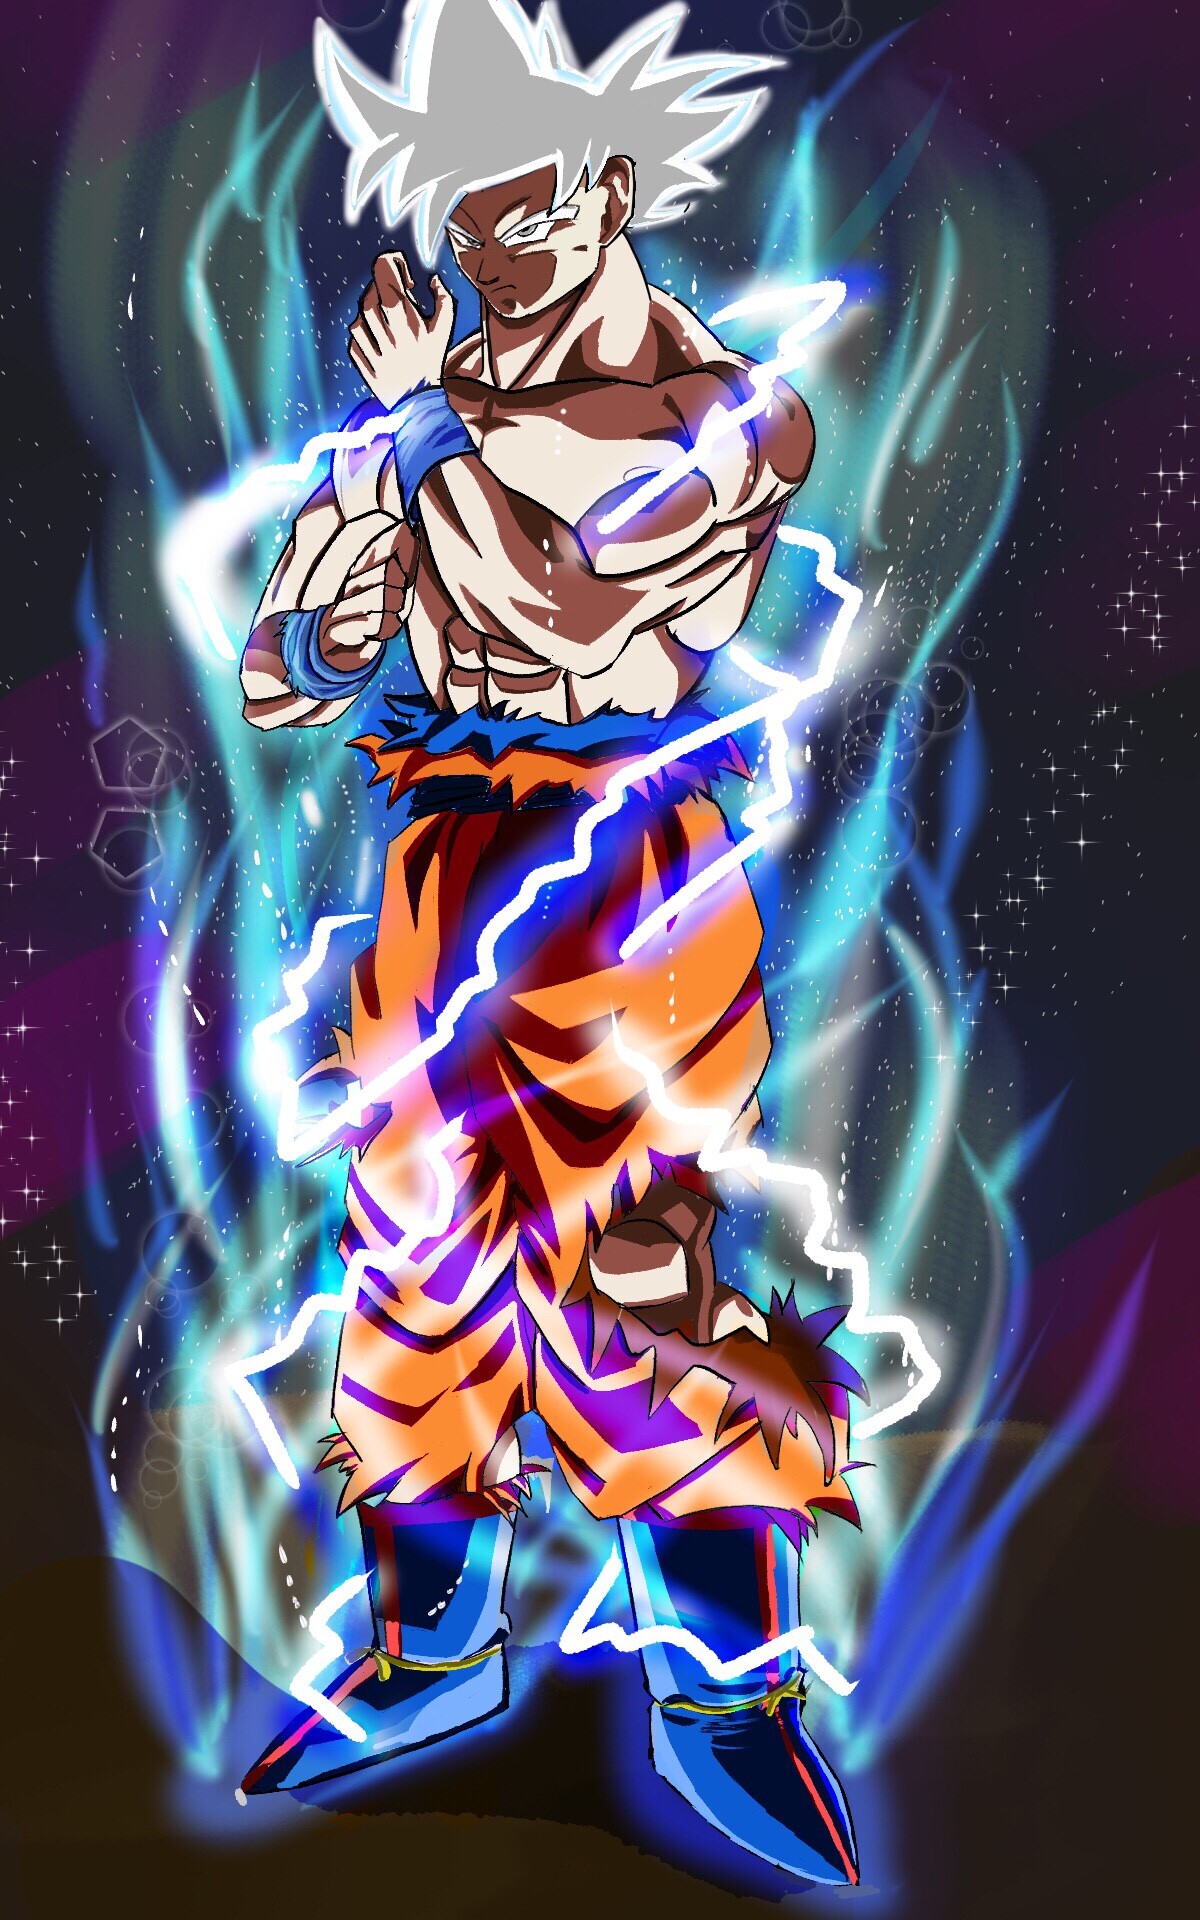 ArtStation - Goku mastered ultra instinct